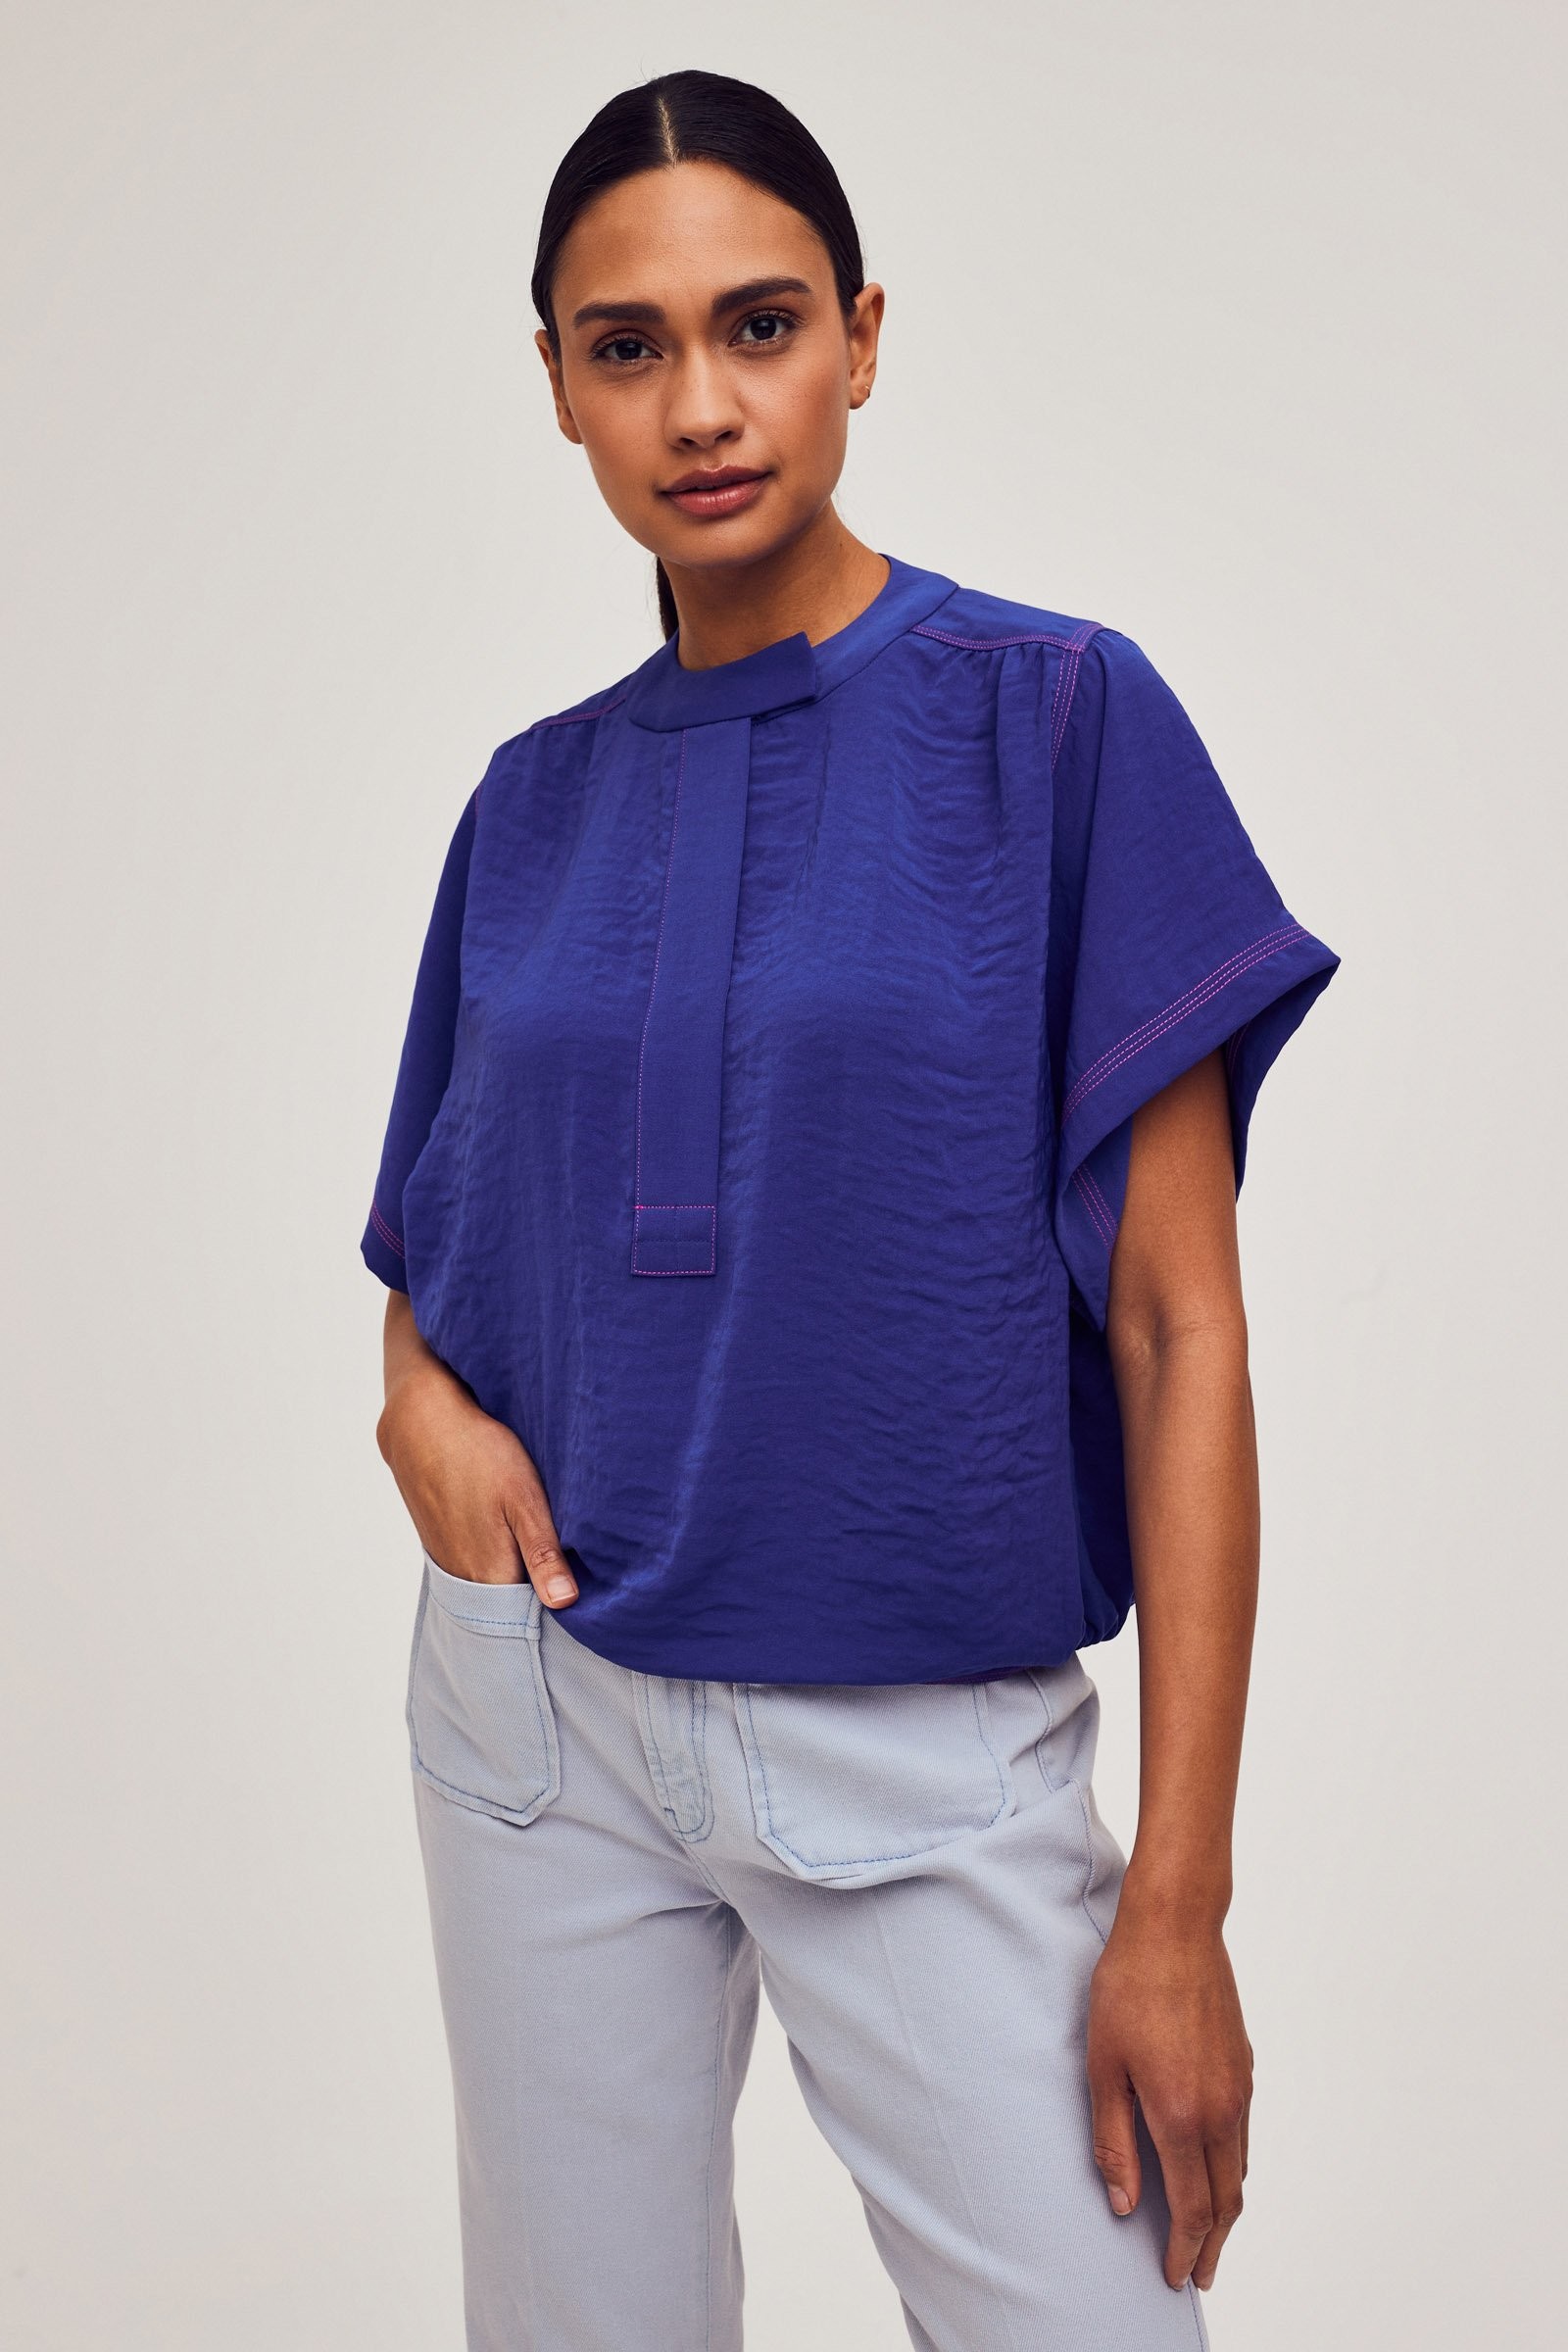 postkantoor Schat Melancholie LEDO - blouse korte mouwen - blauw | CKS Fashion